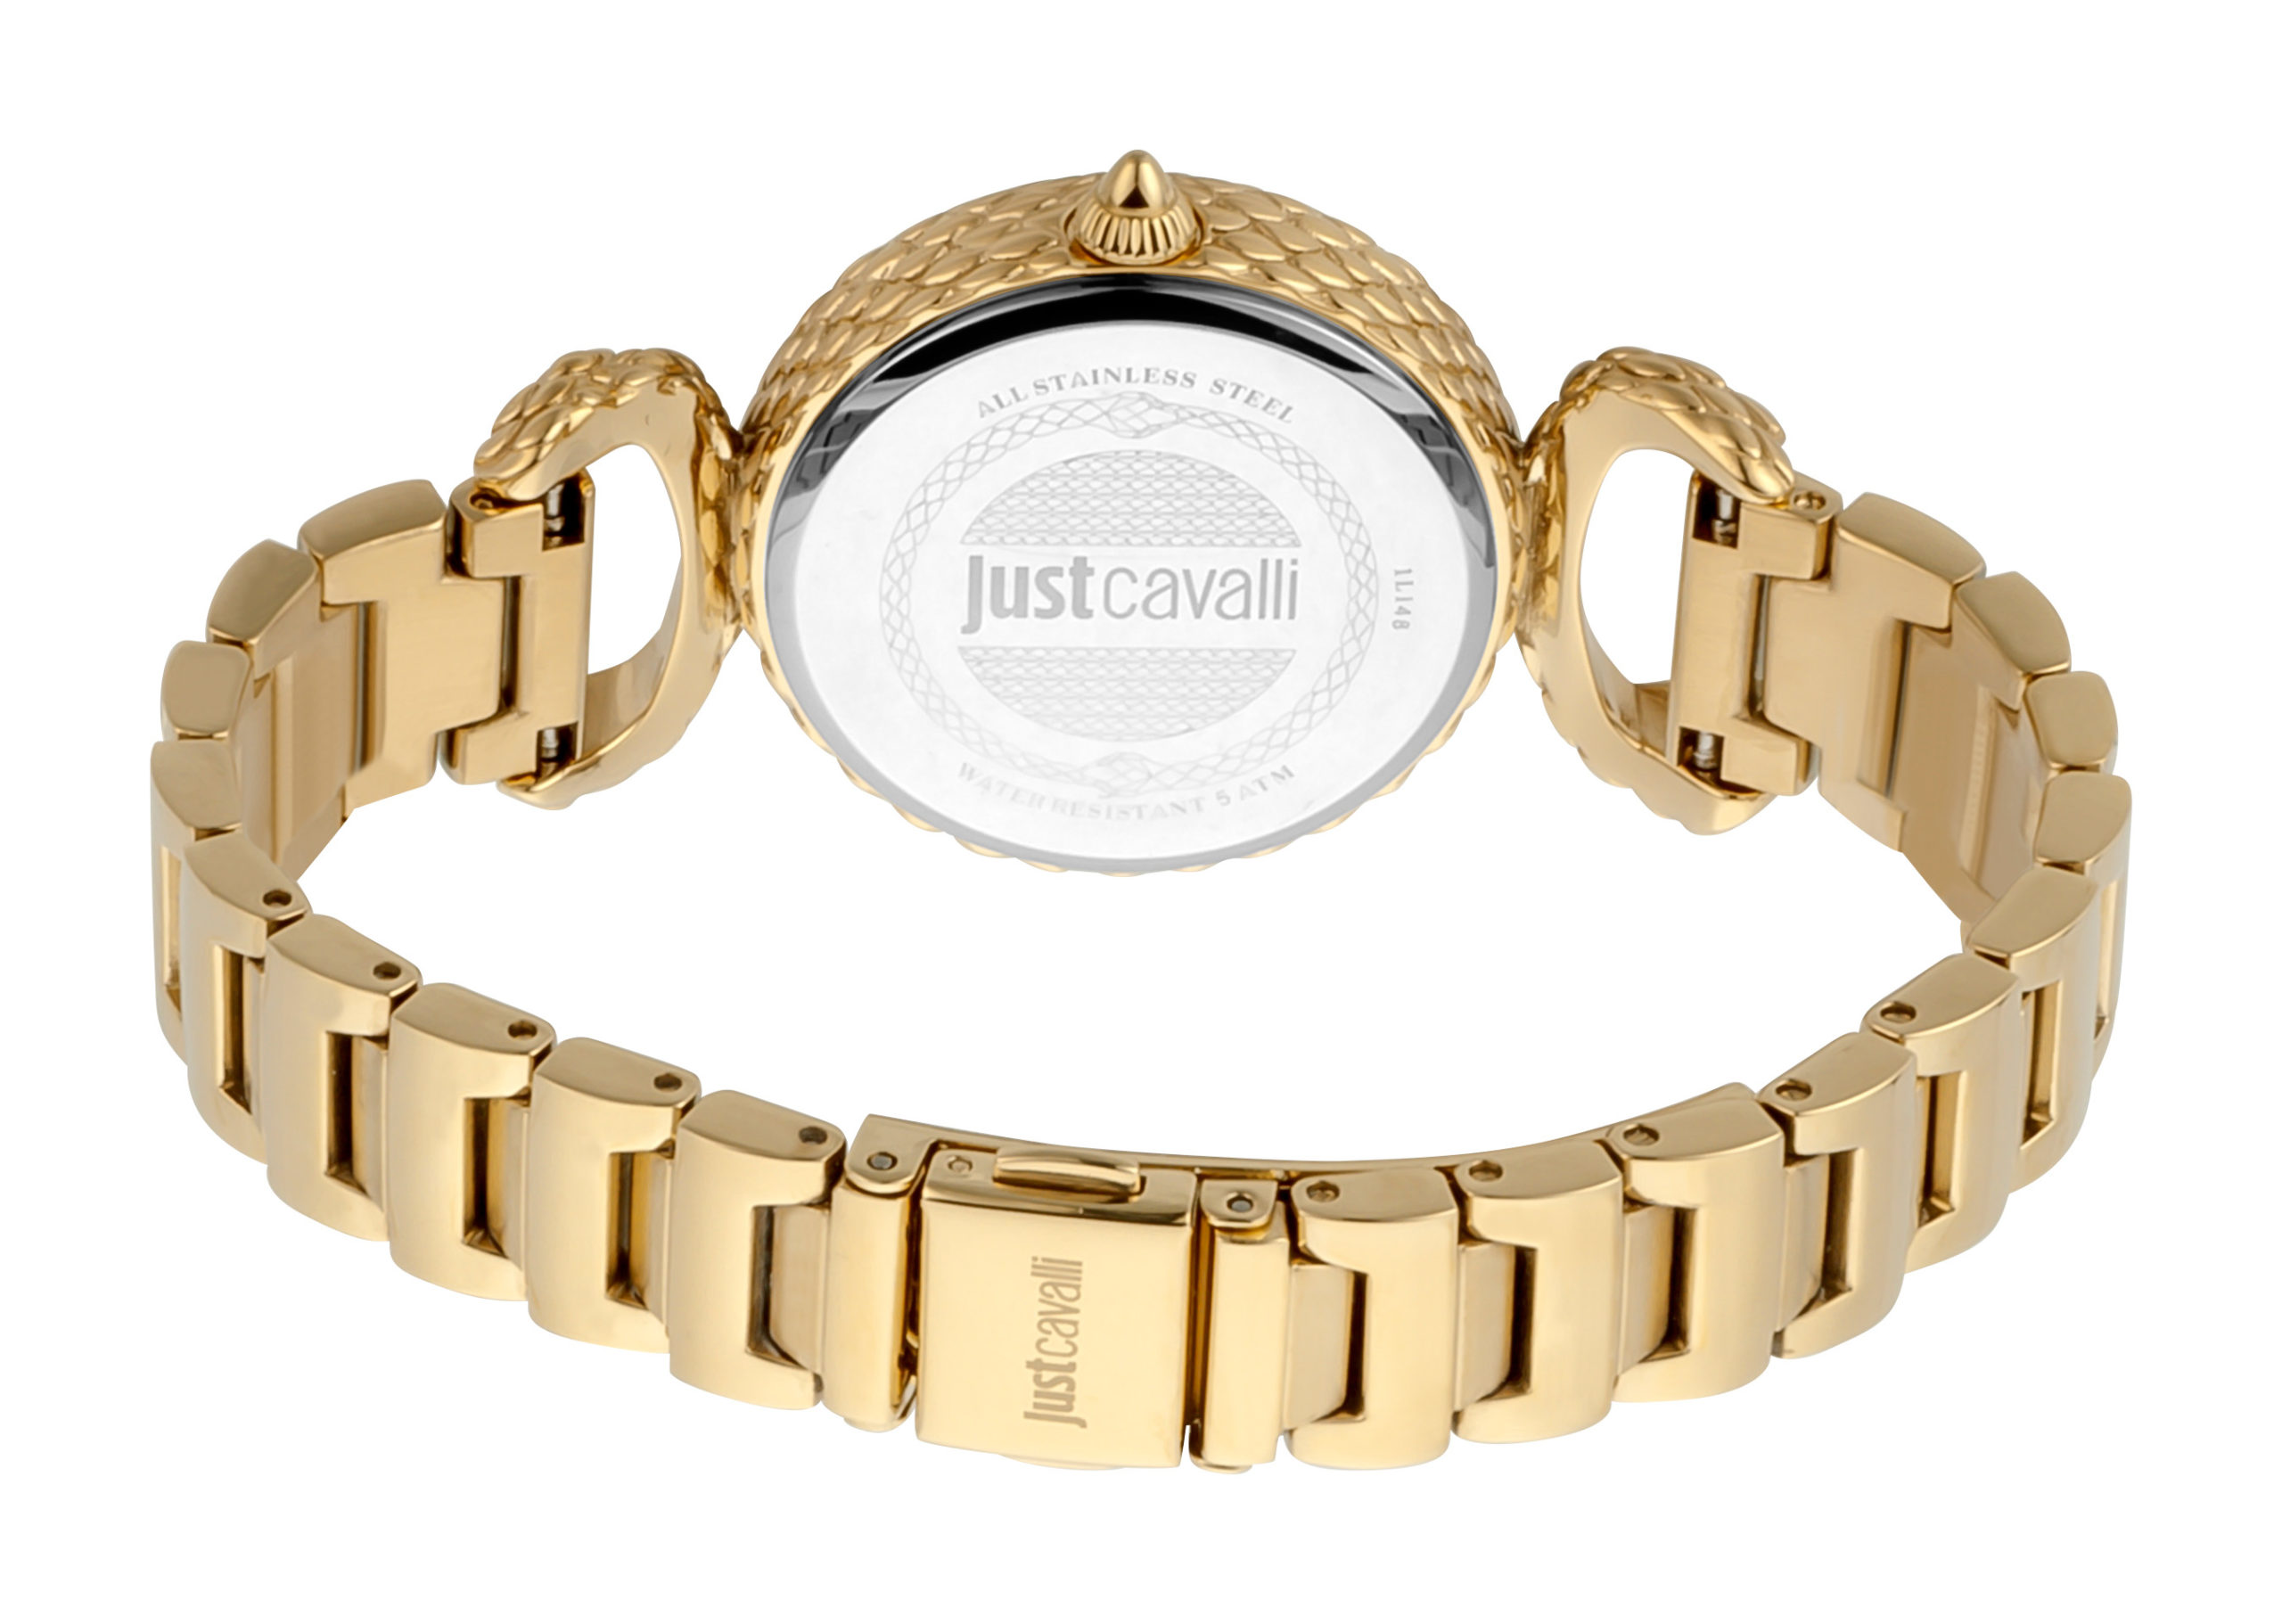 Interno Gold Champagne - Just Cavalli Watches